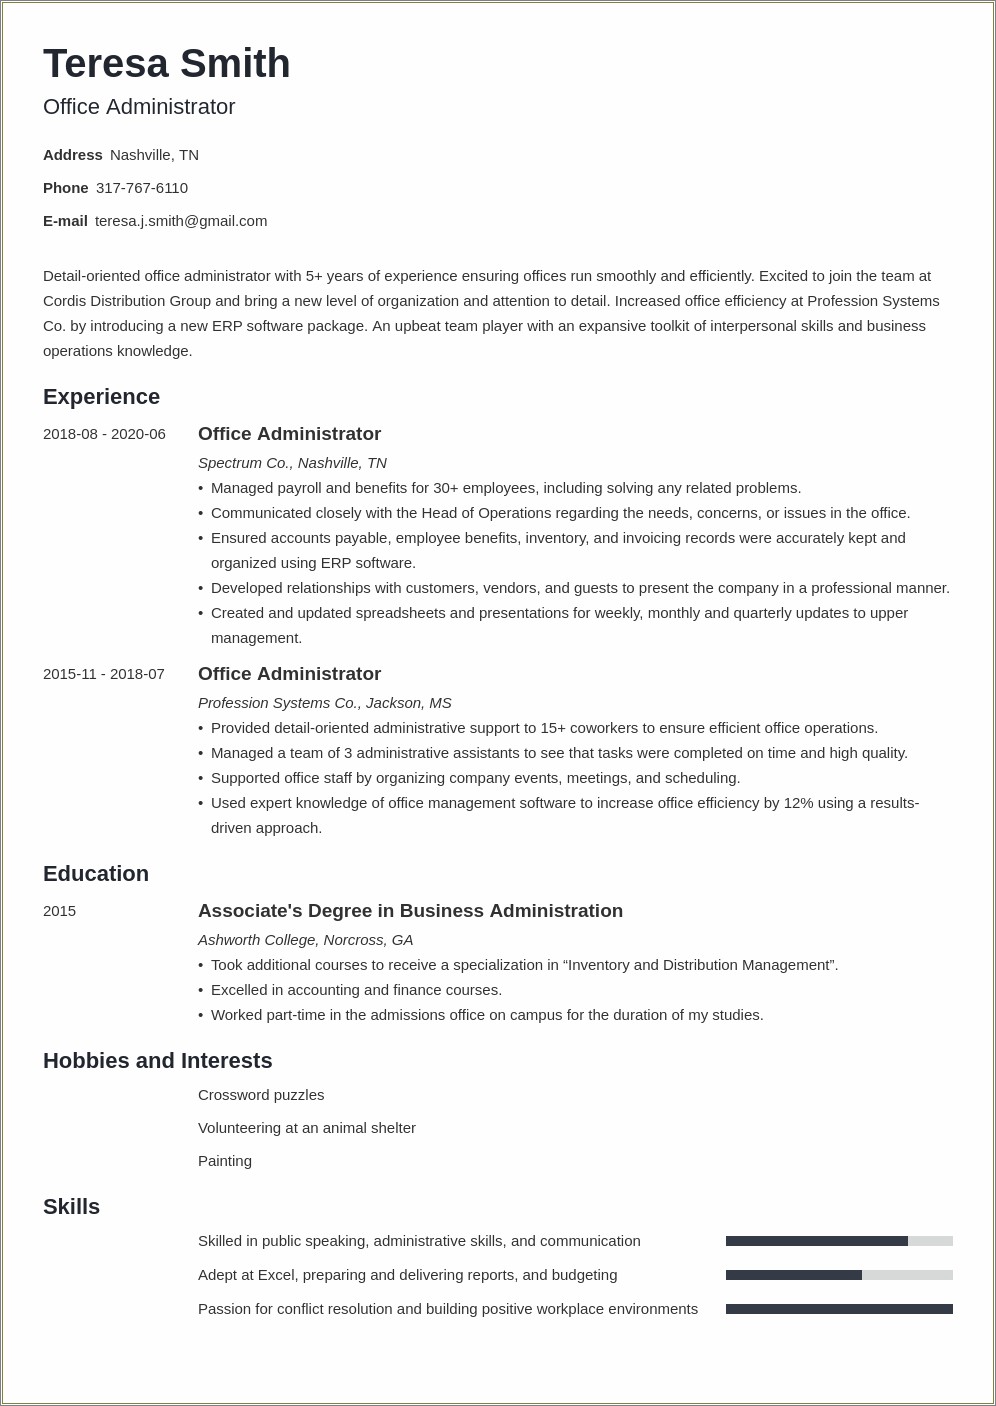 Resume Description For Organizational Mangment Office